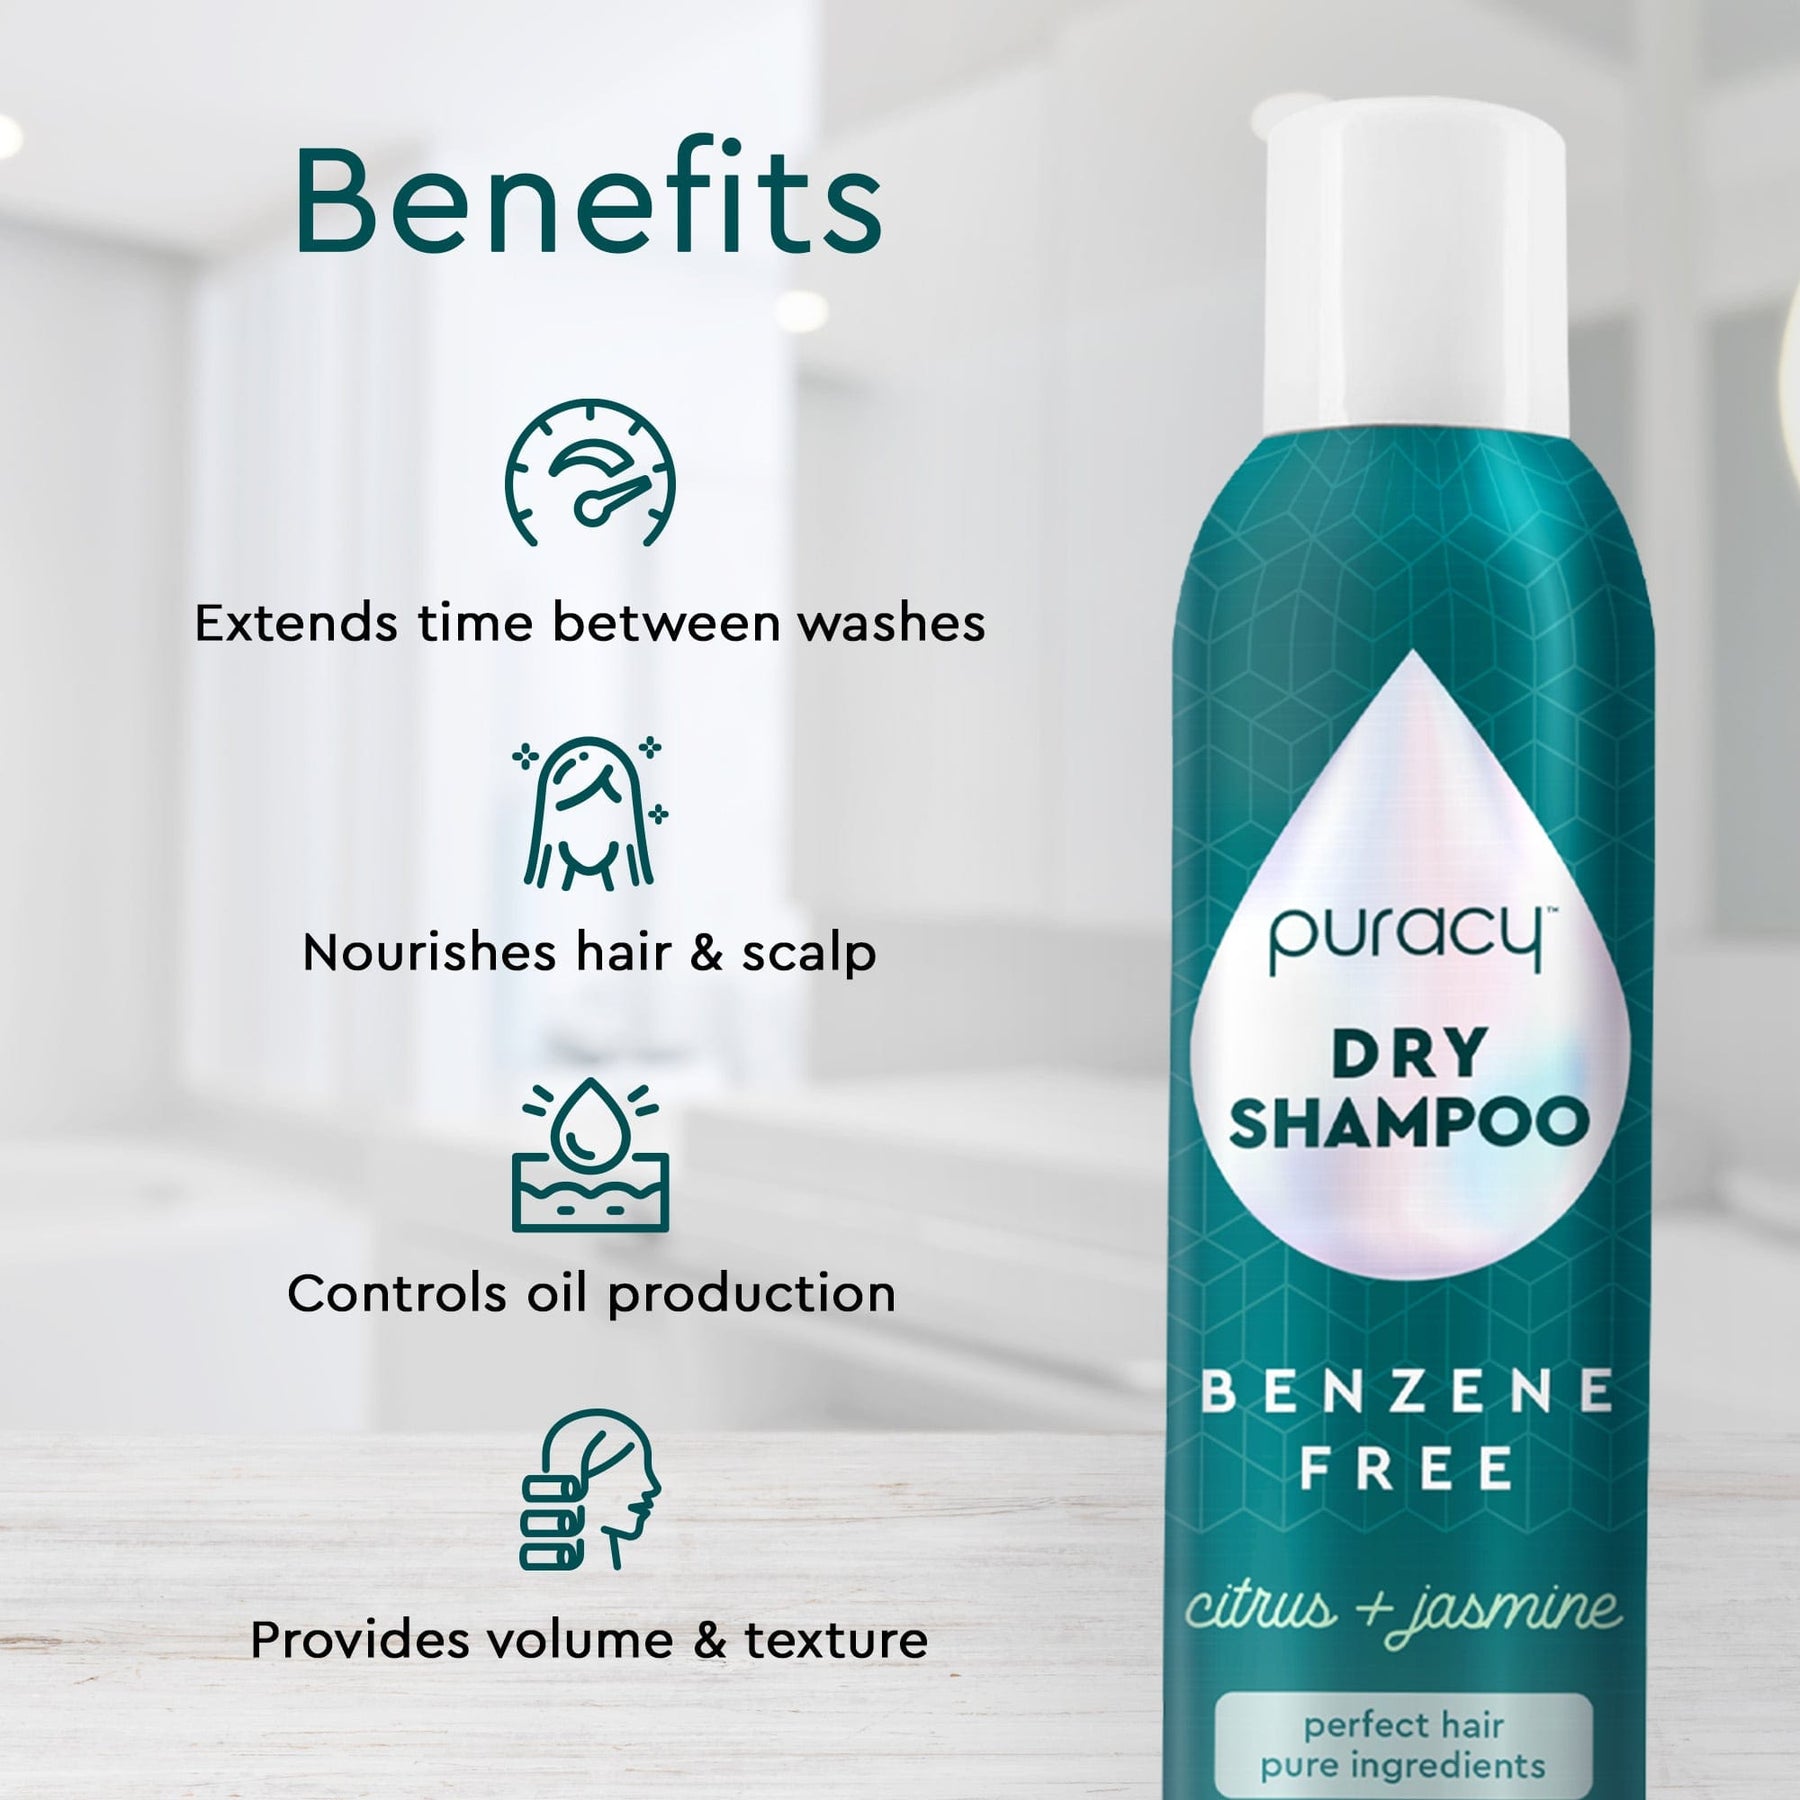 Beneftis of Puracy Natural Dry Shampoo